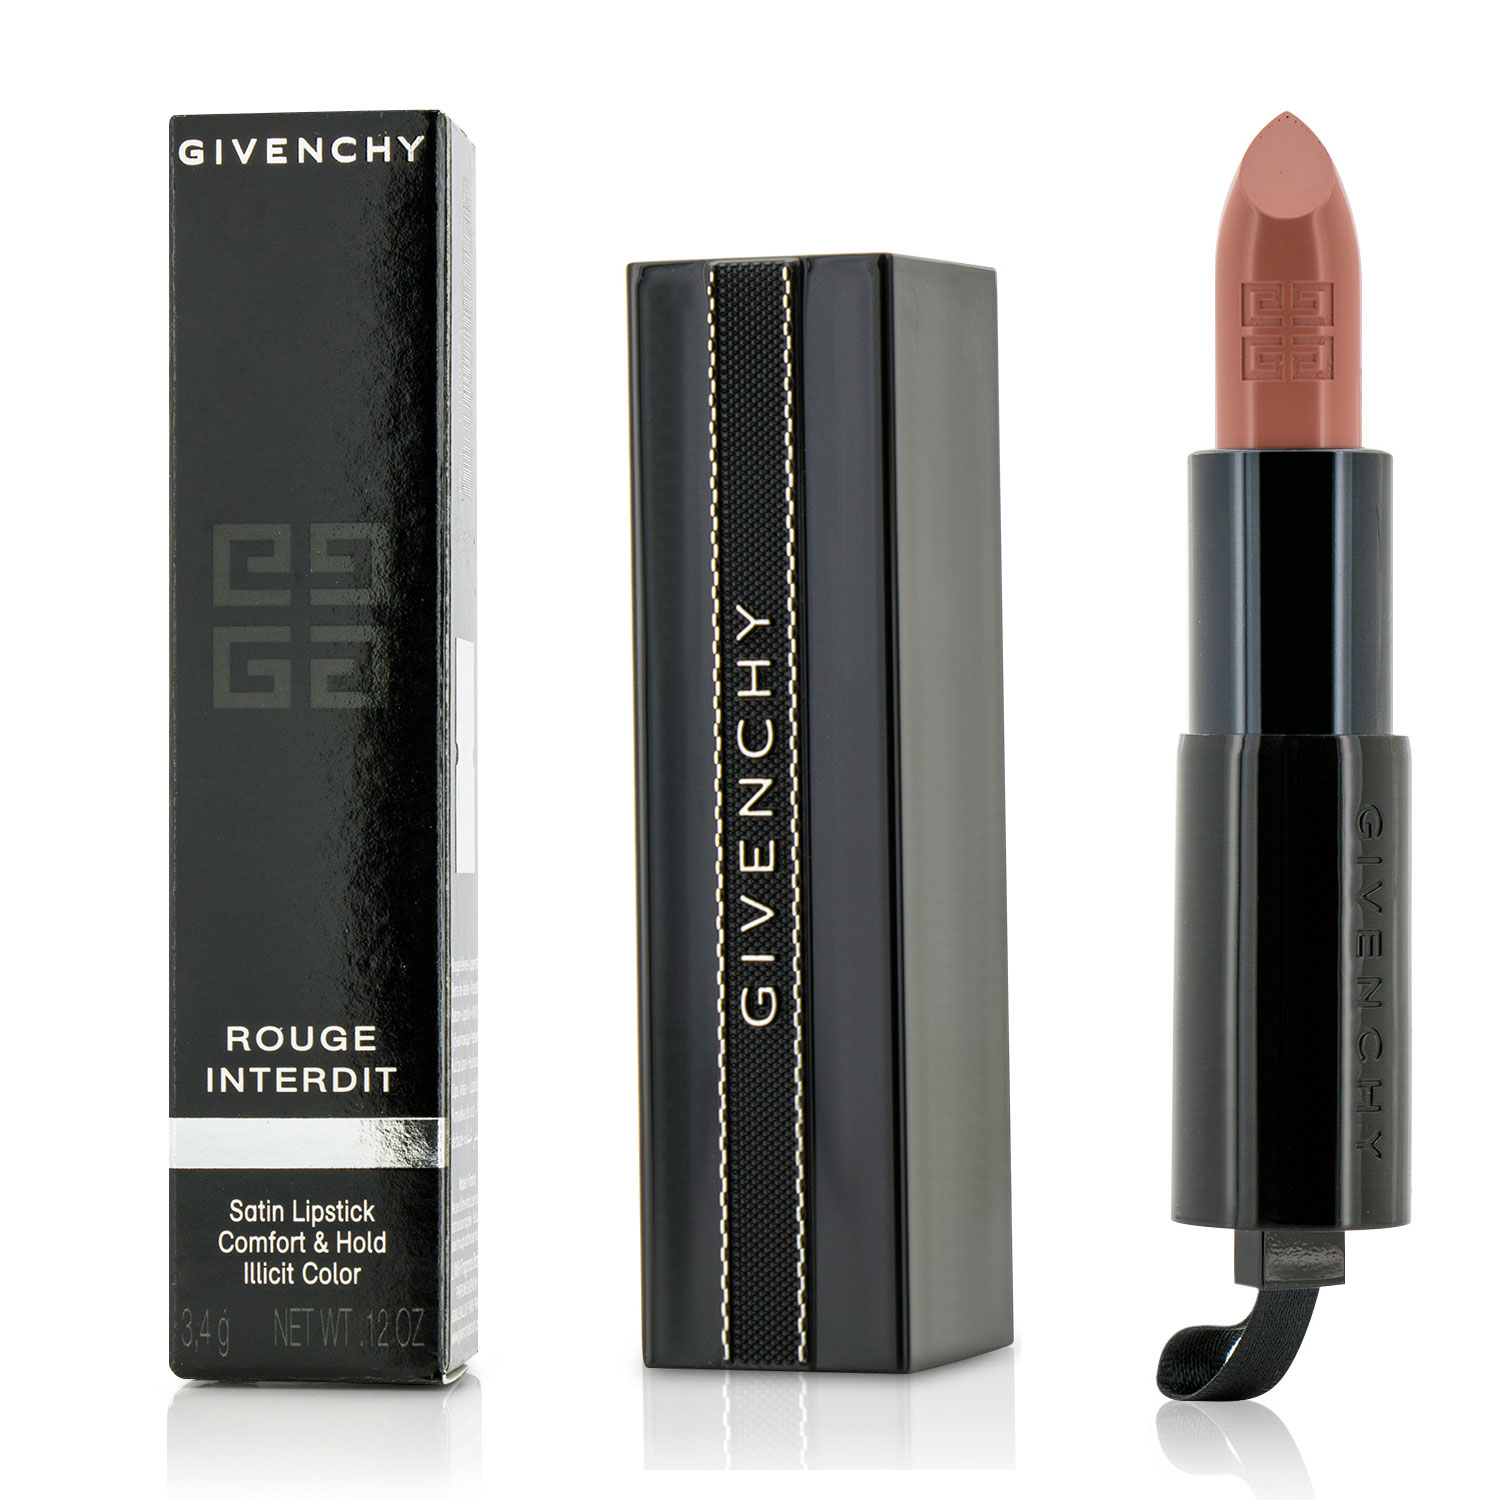 Rouge Interdit Satin Lipstick - # 4 Street Rose Givenchy Image